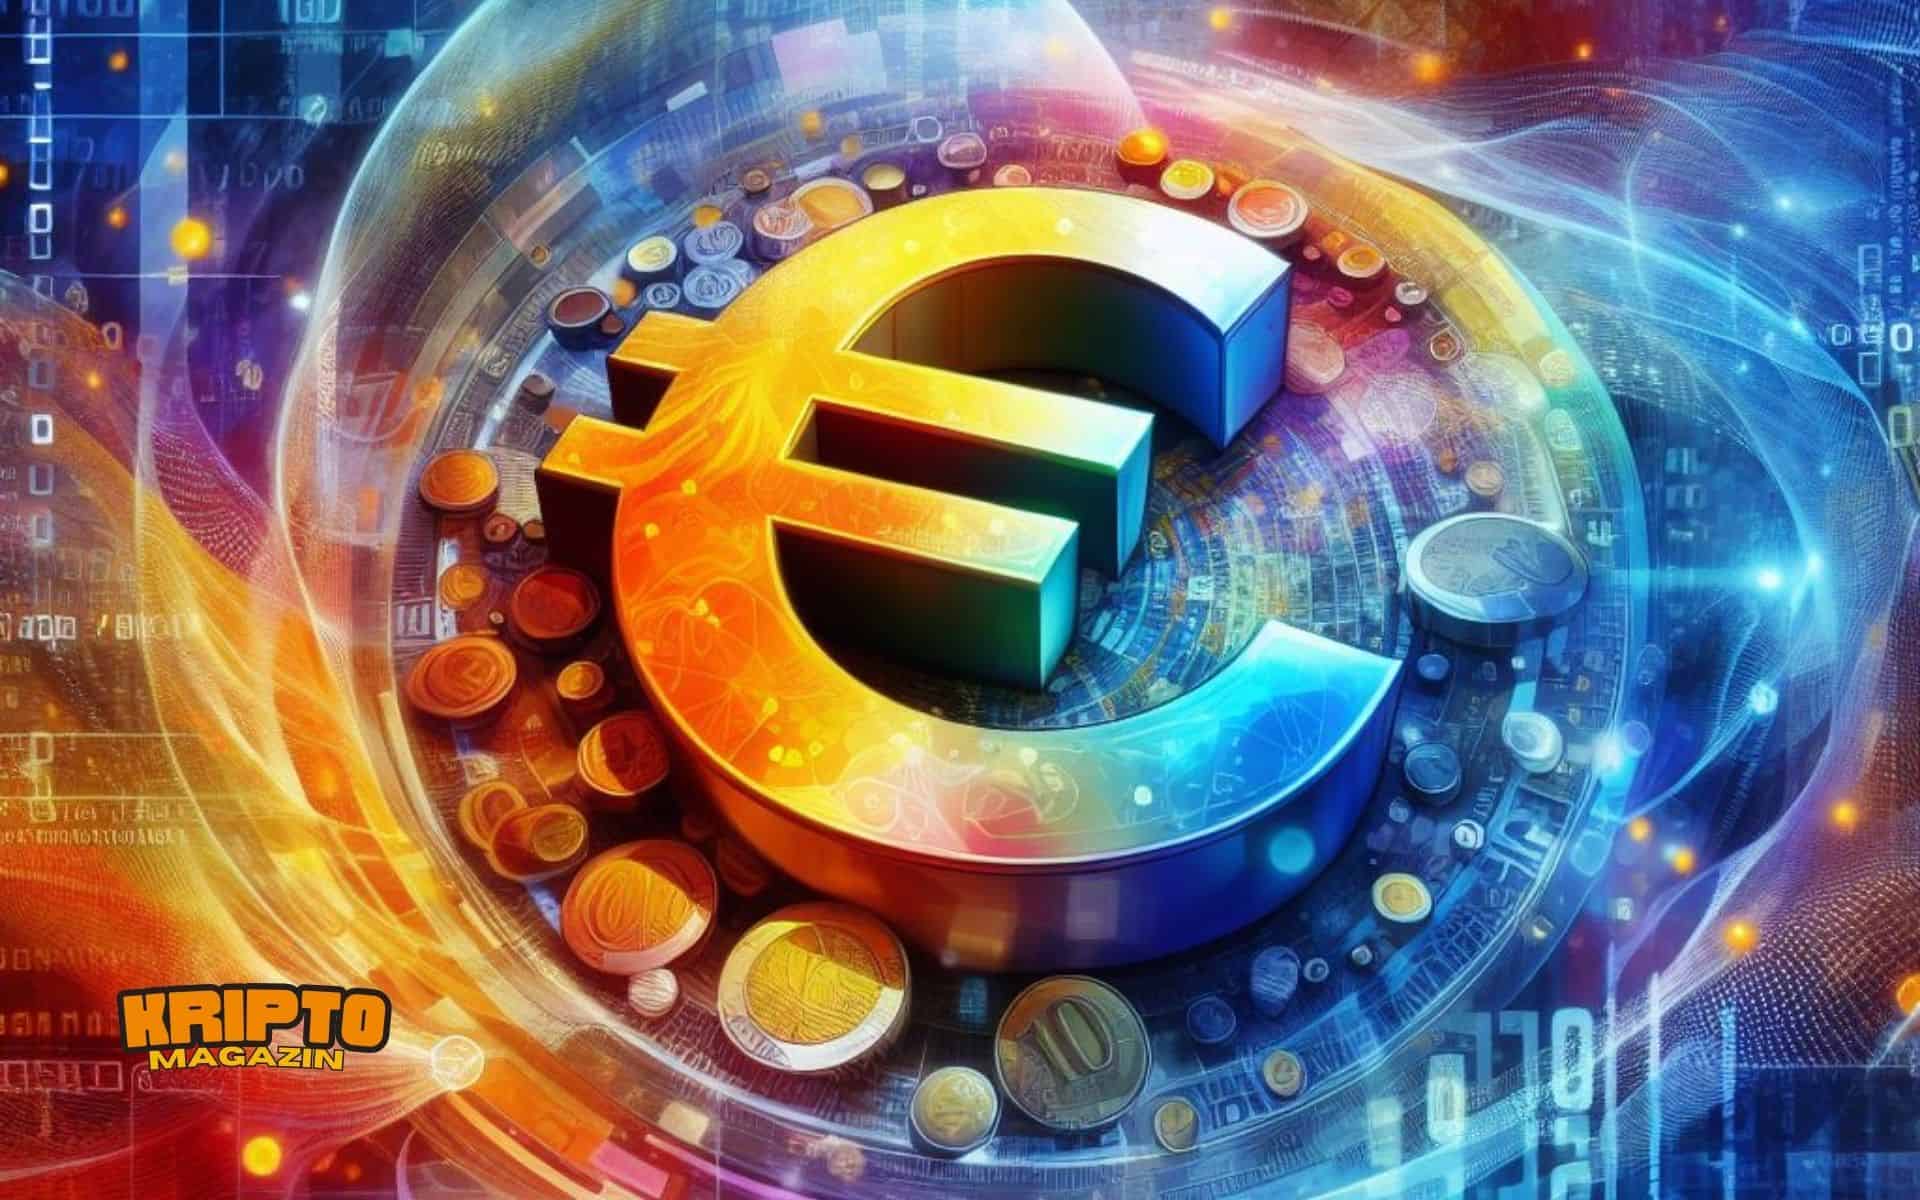 Kriptomagazin digital euro